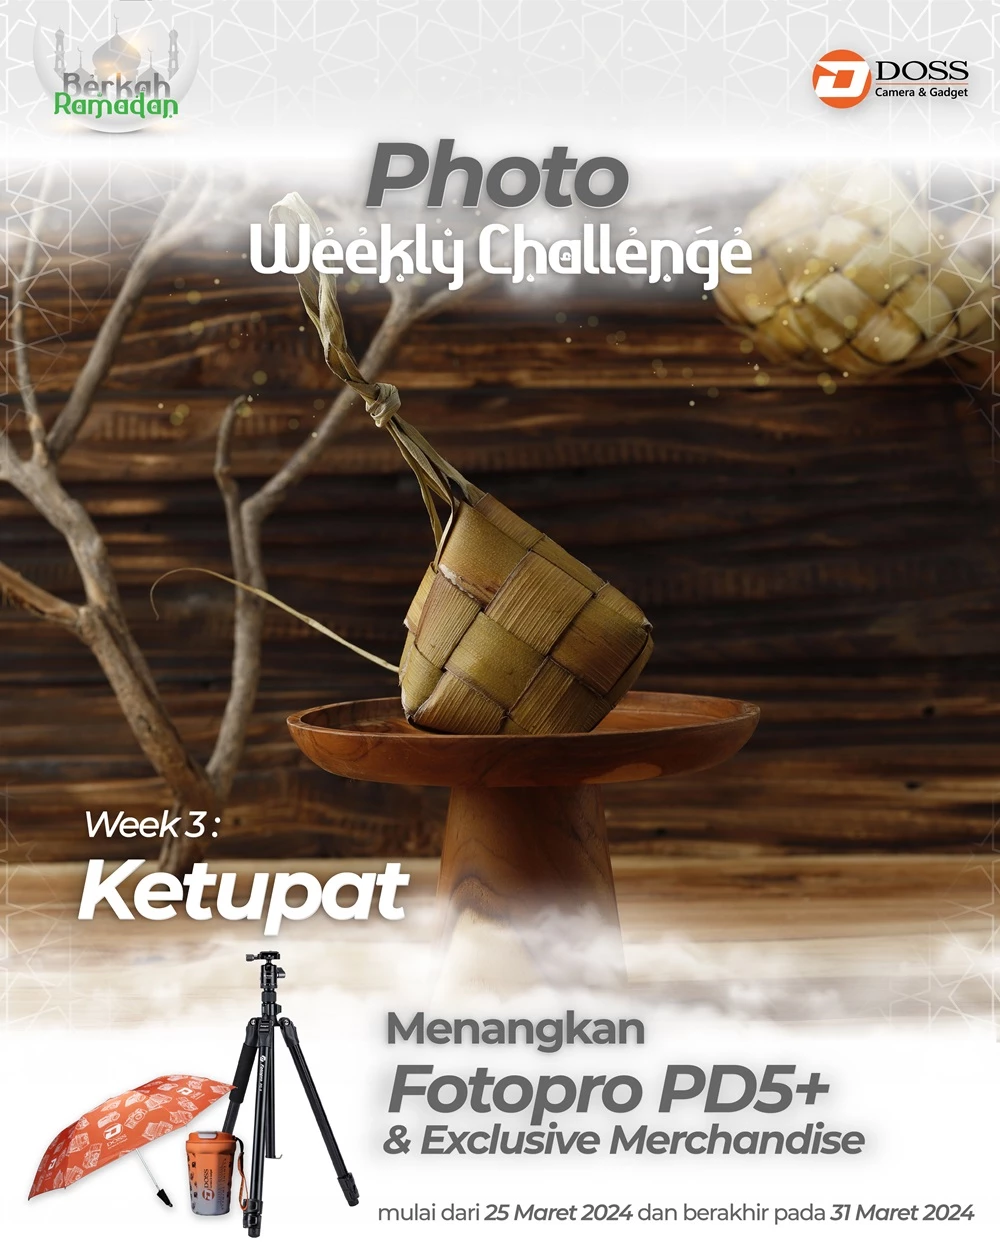 Ayo Ikutan Weekly Photo Competition Challenge Week 3 tema "KETUPAT" dan Menangkan Fotopro PD5+